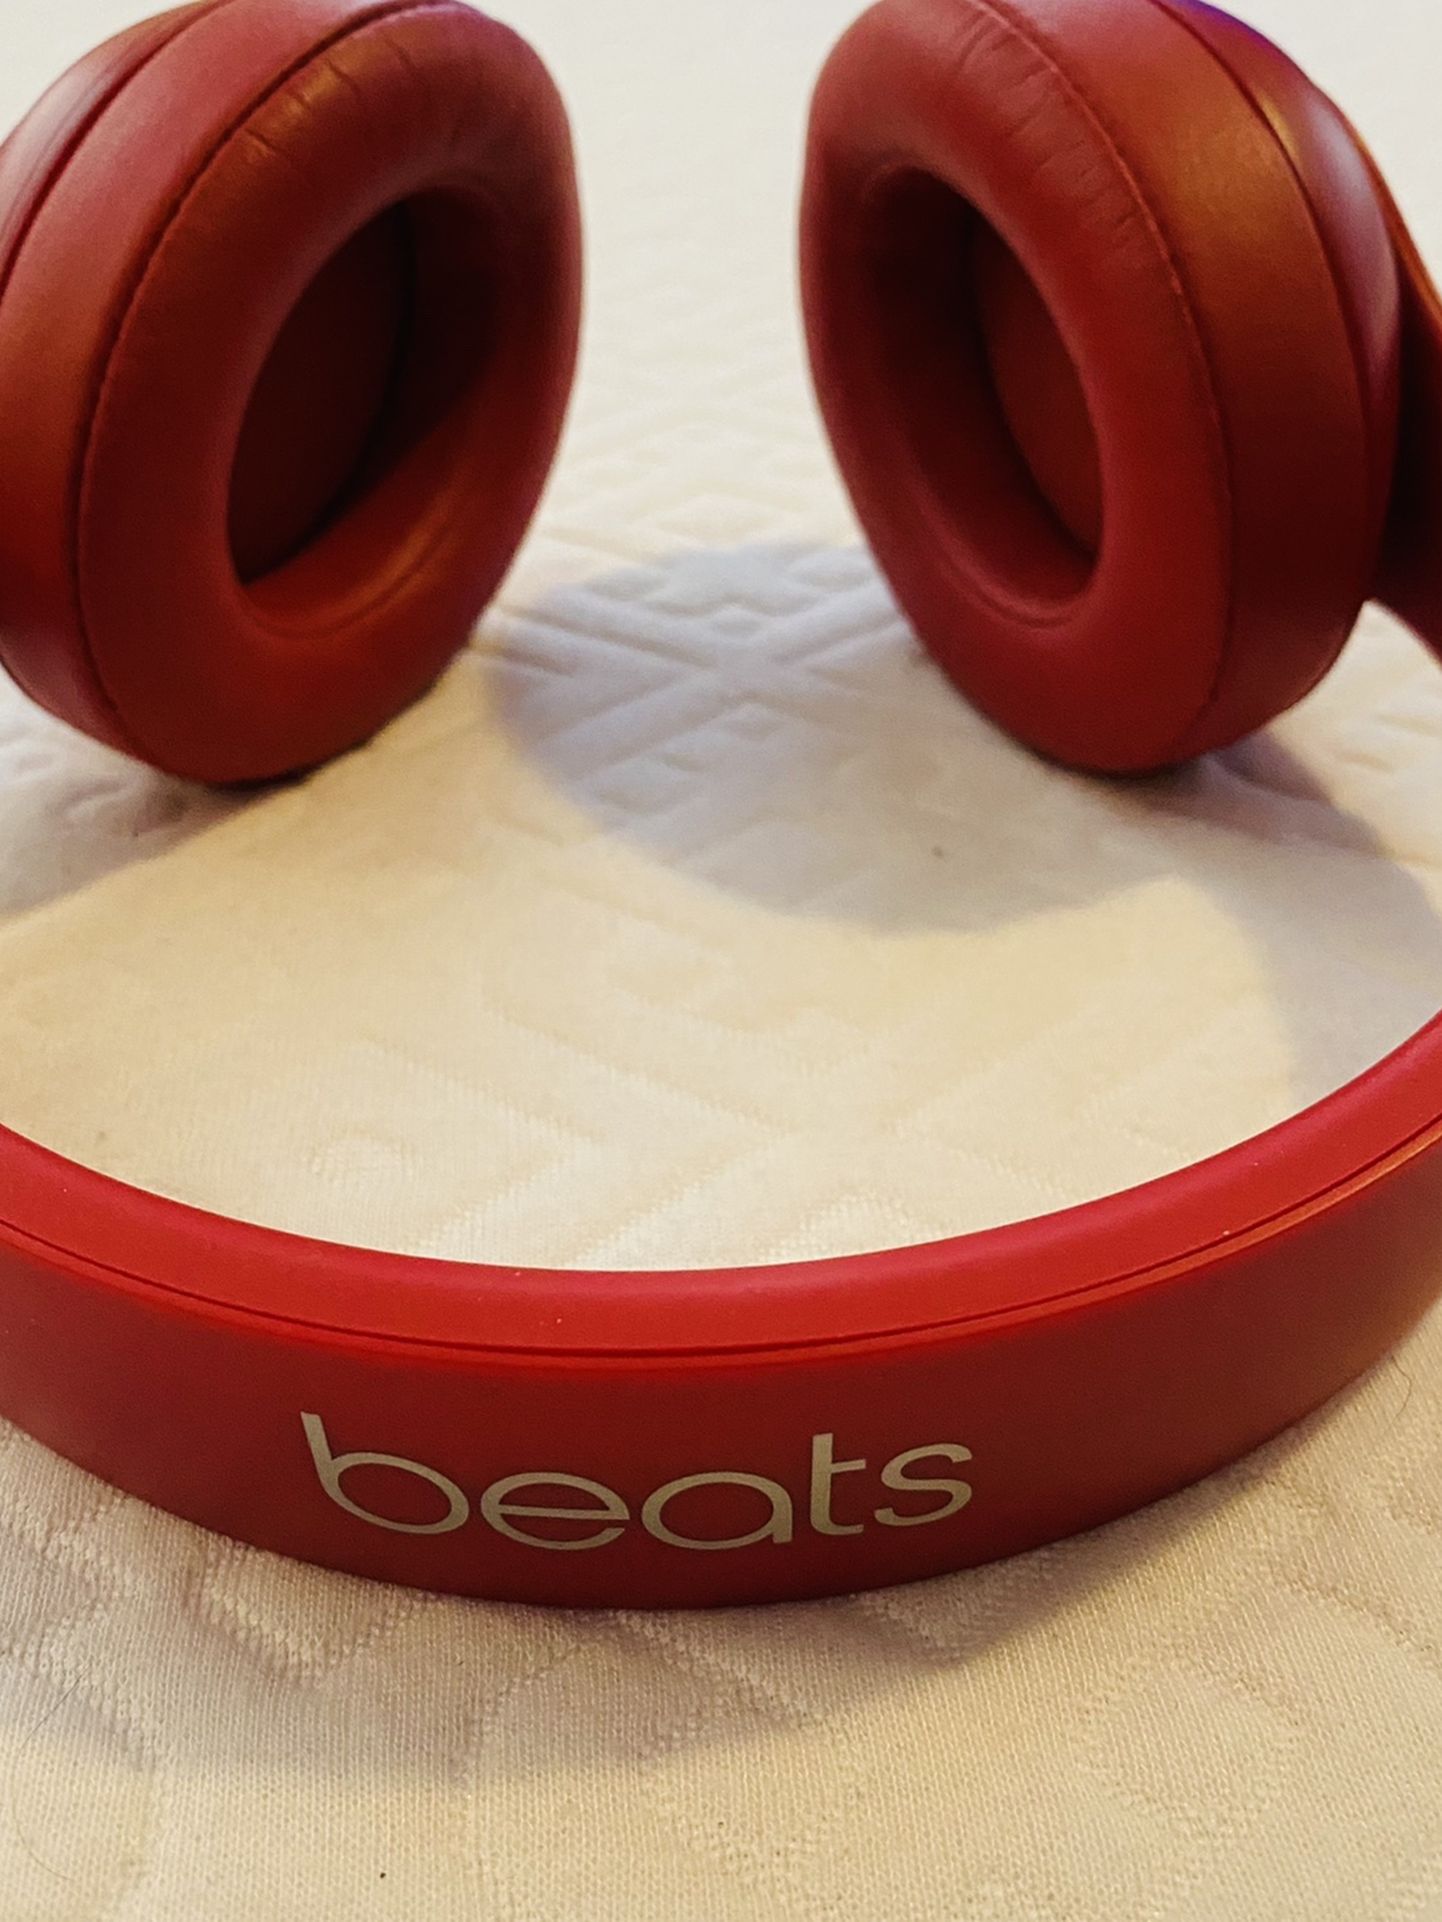 Beats Headsets